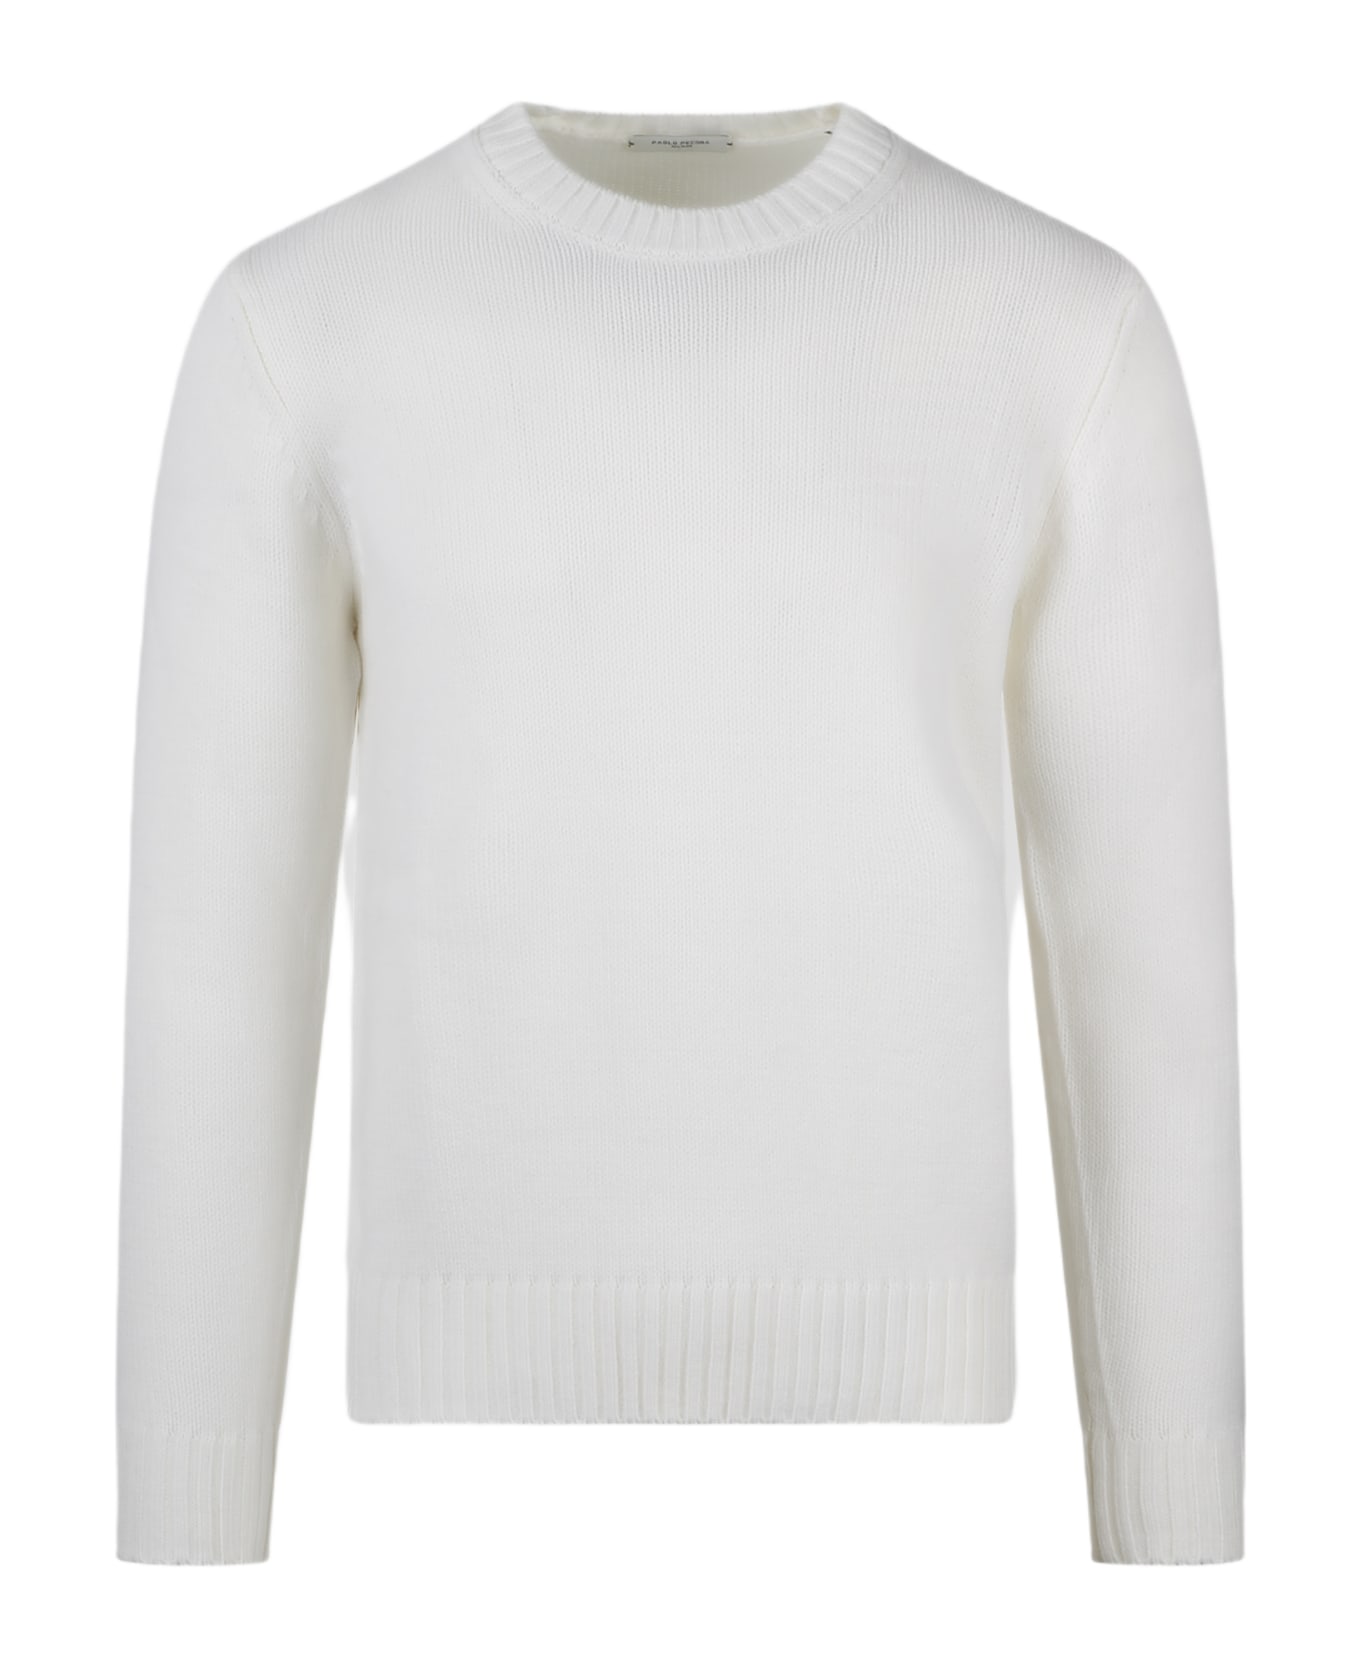 Paolo Pecora Crewneck Sweater - White